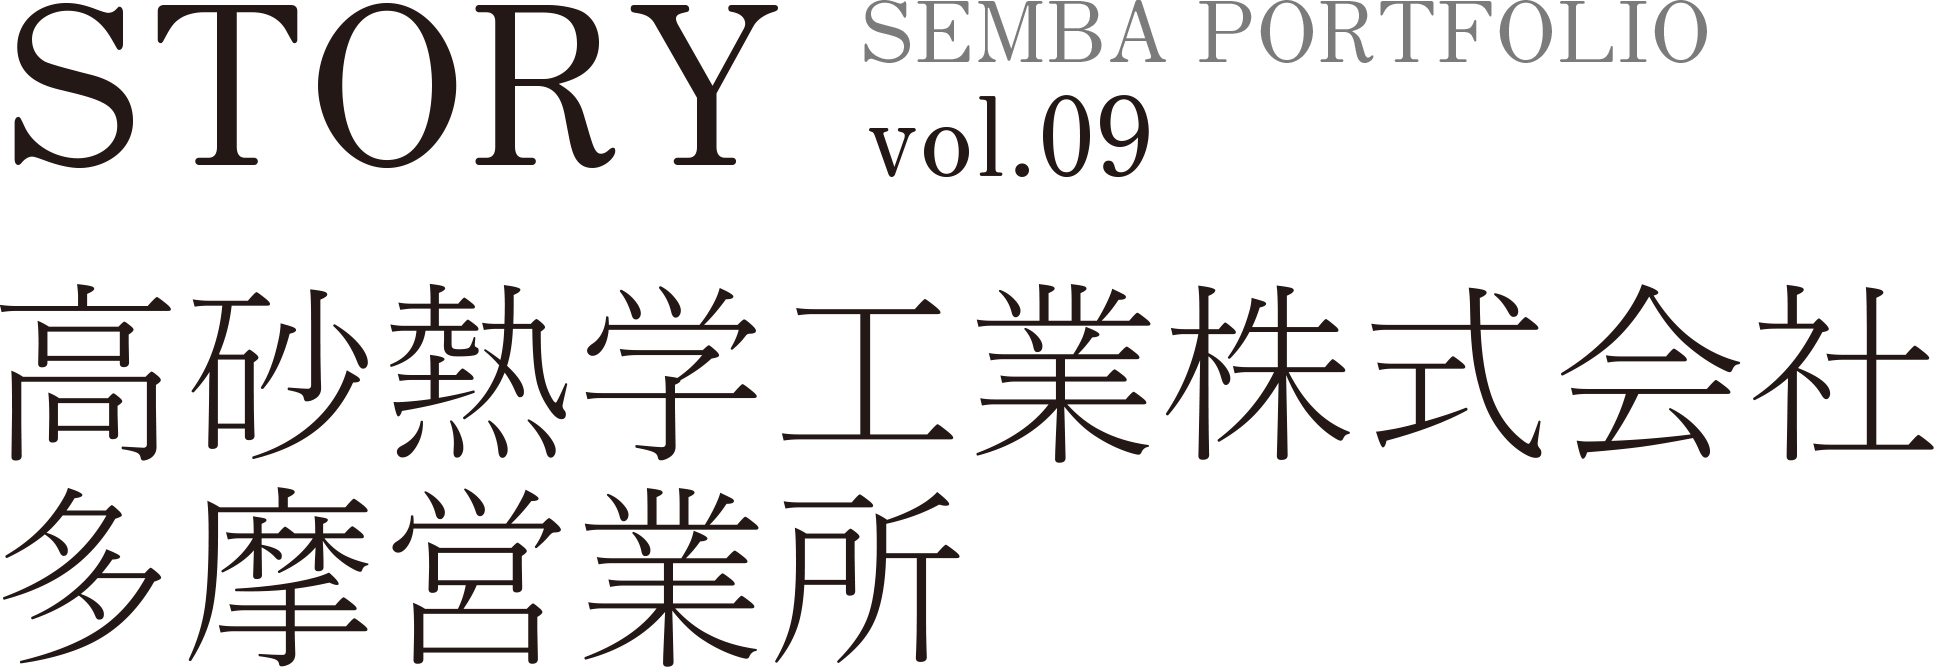 SEMBA PORTFOLIO STORY vol.09 高砂熱学工業株式会社多摩営業所